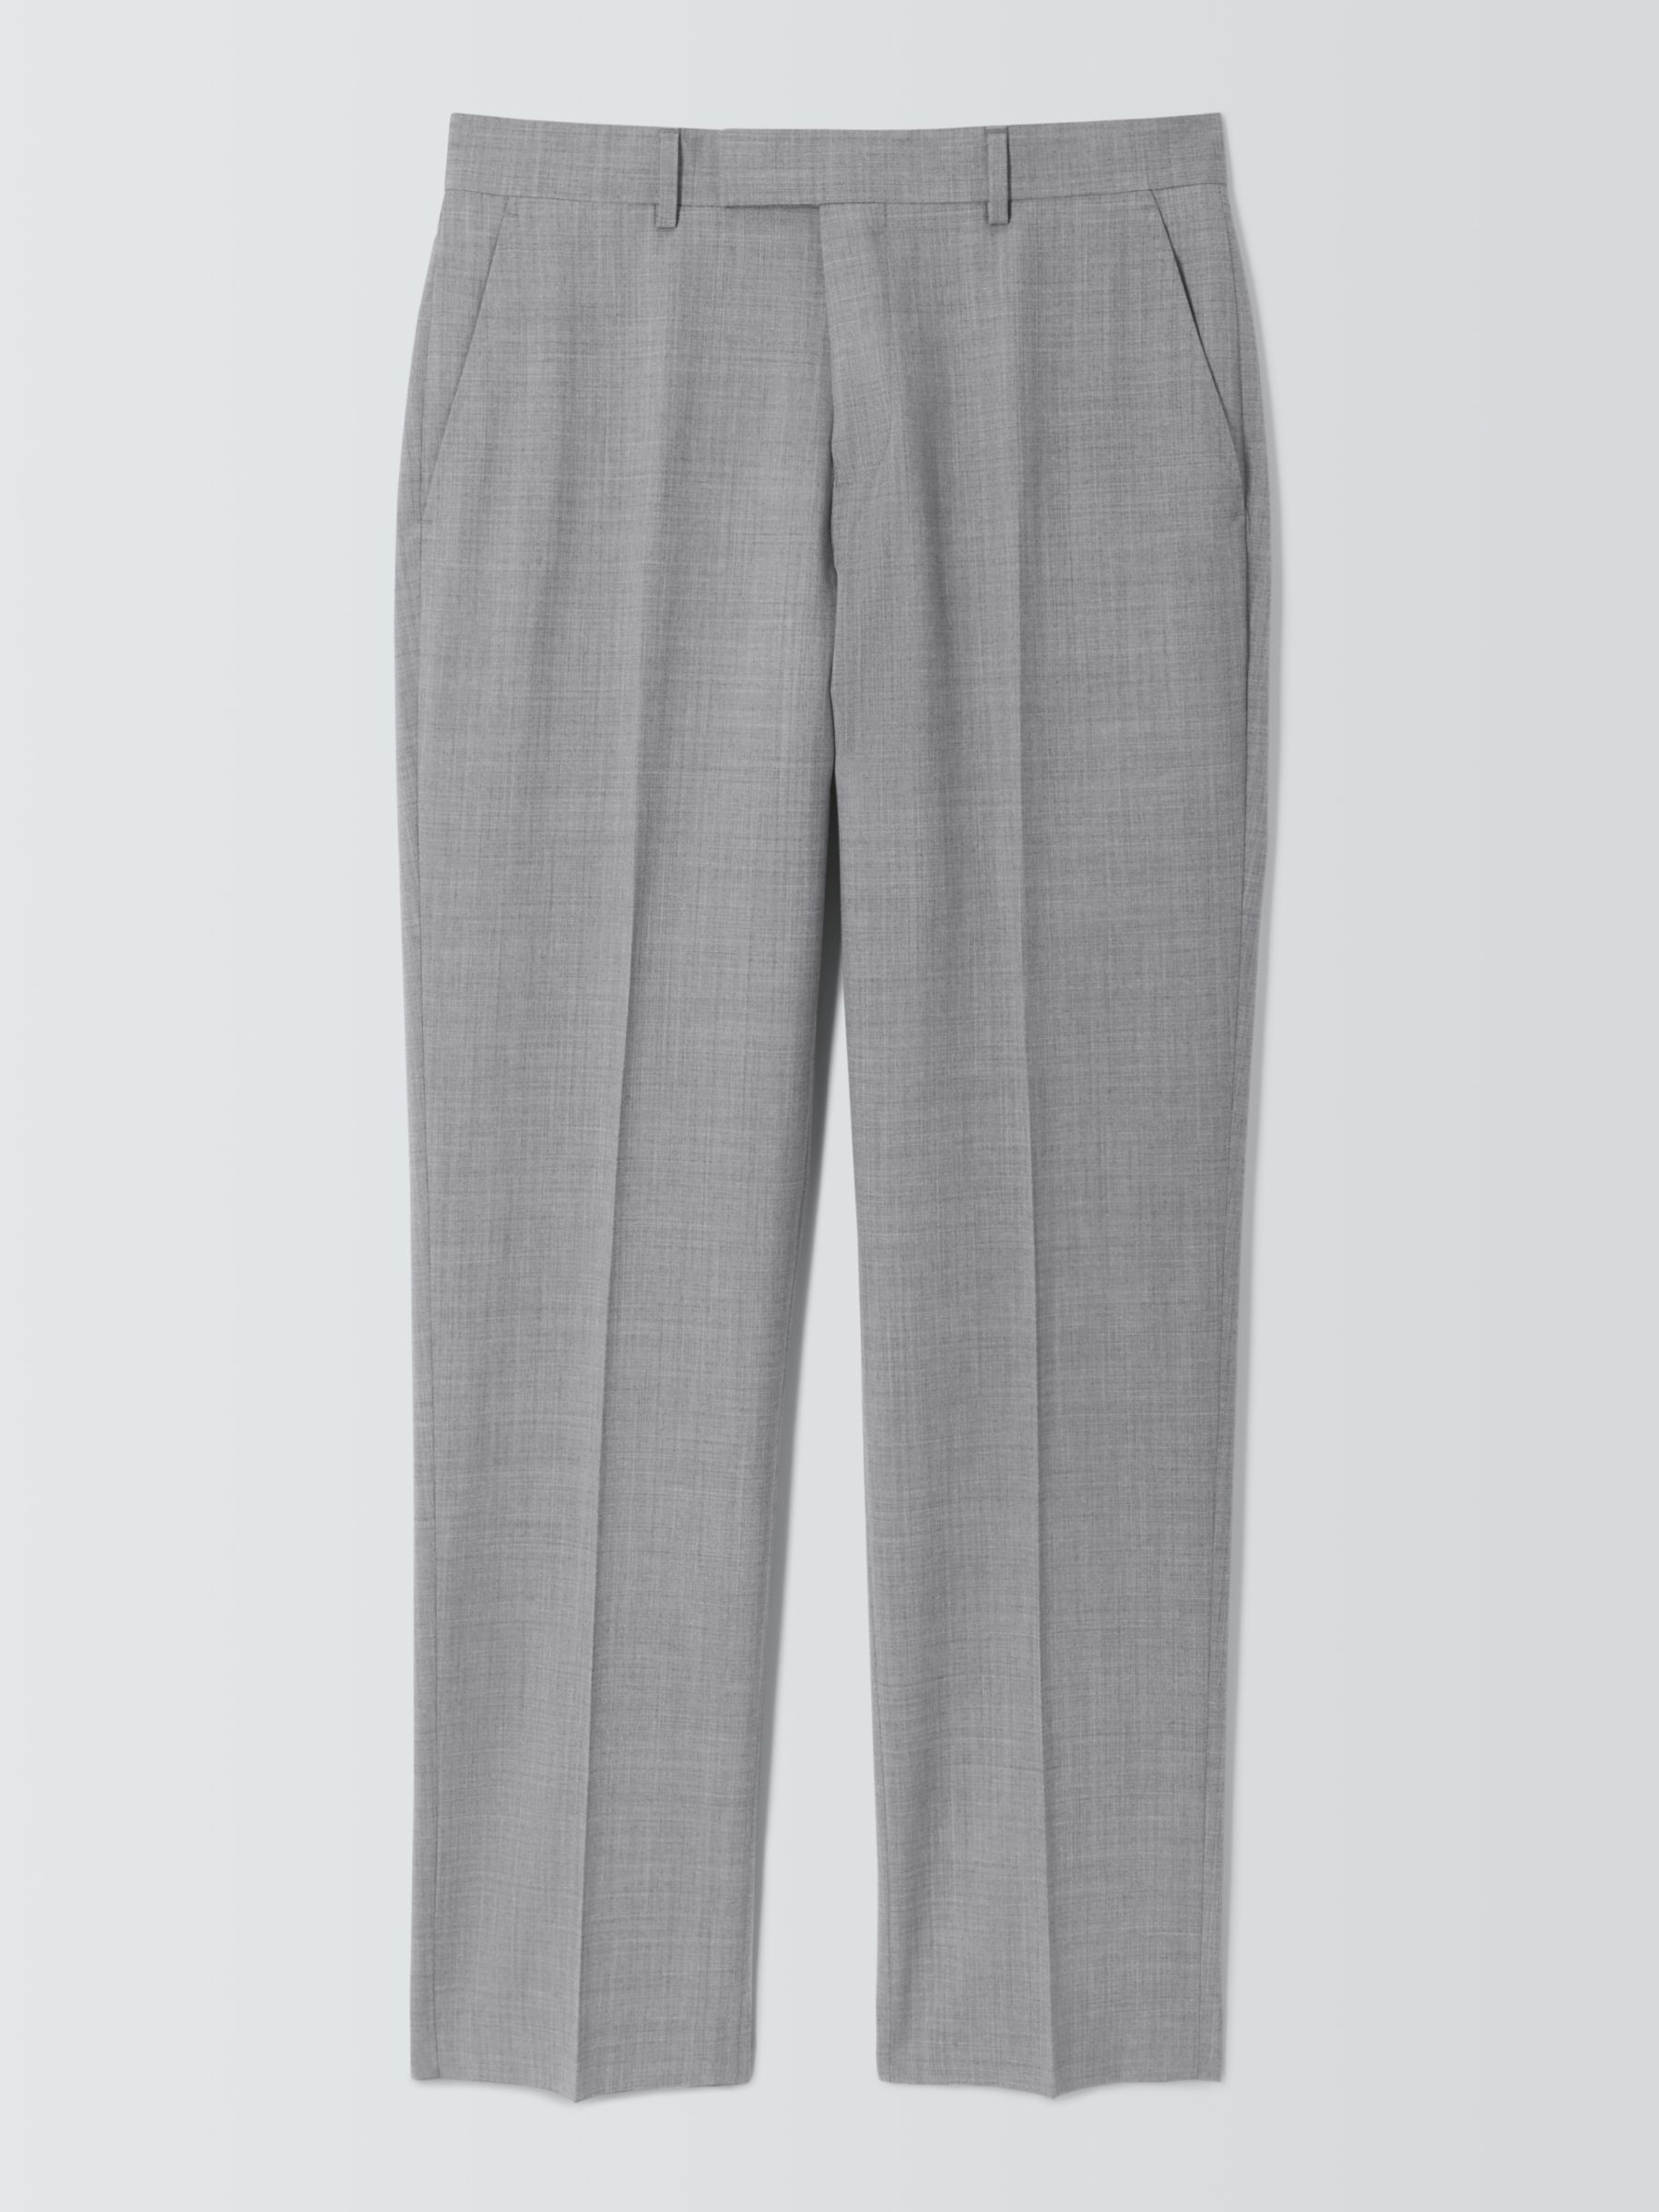 John Lewis Hanford Regular Fit Trousers, Light Grey, 38R